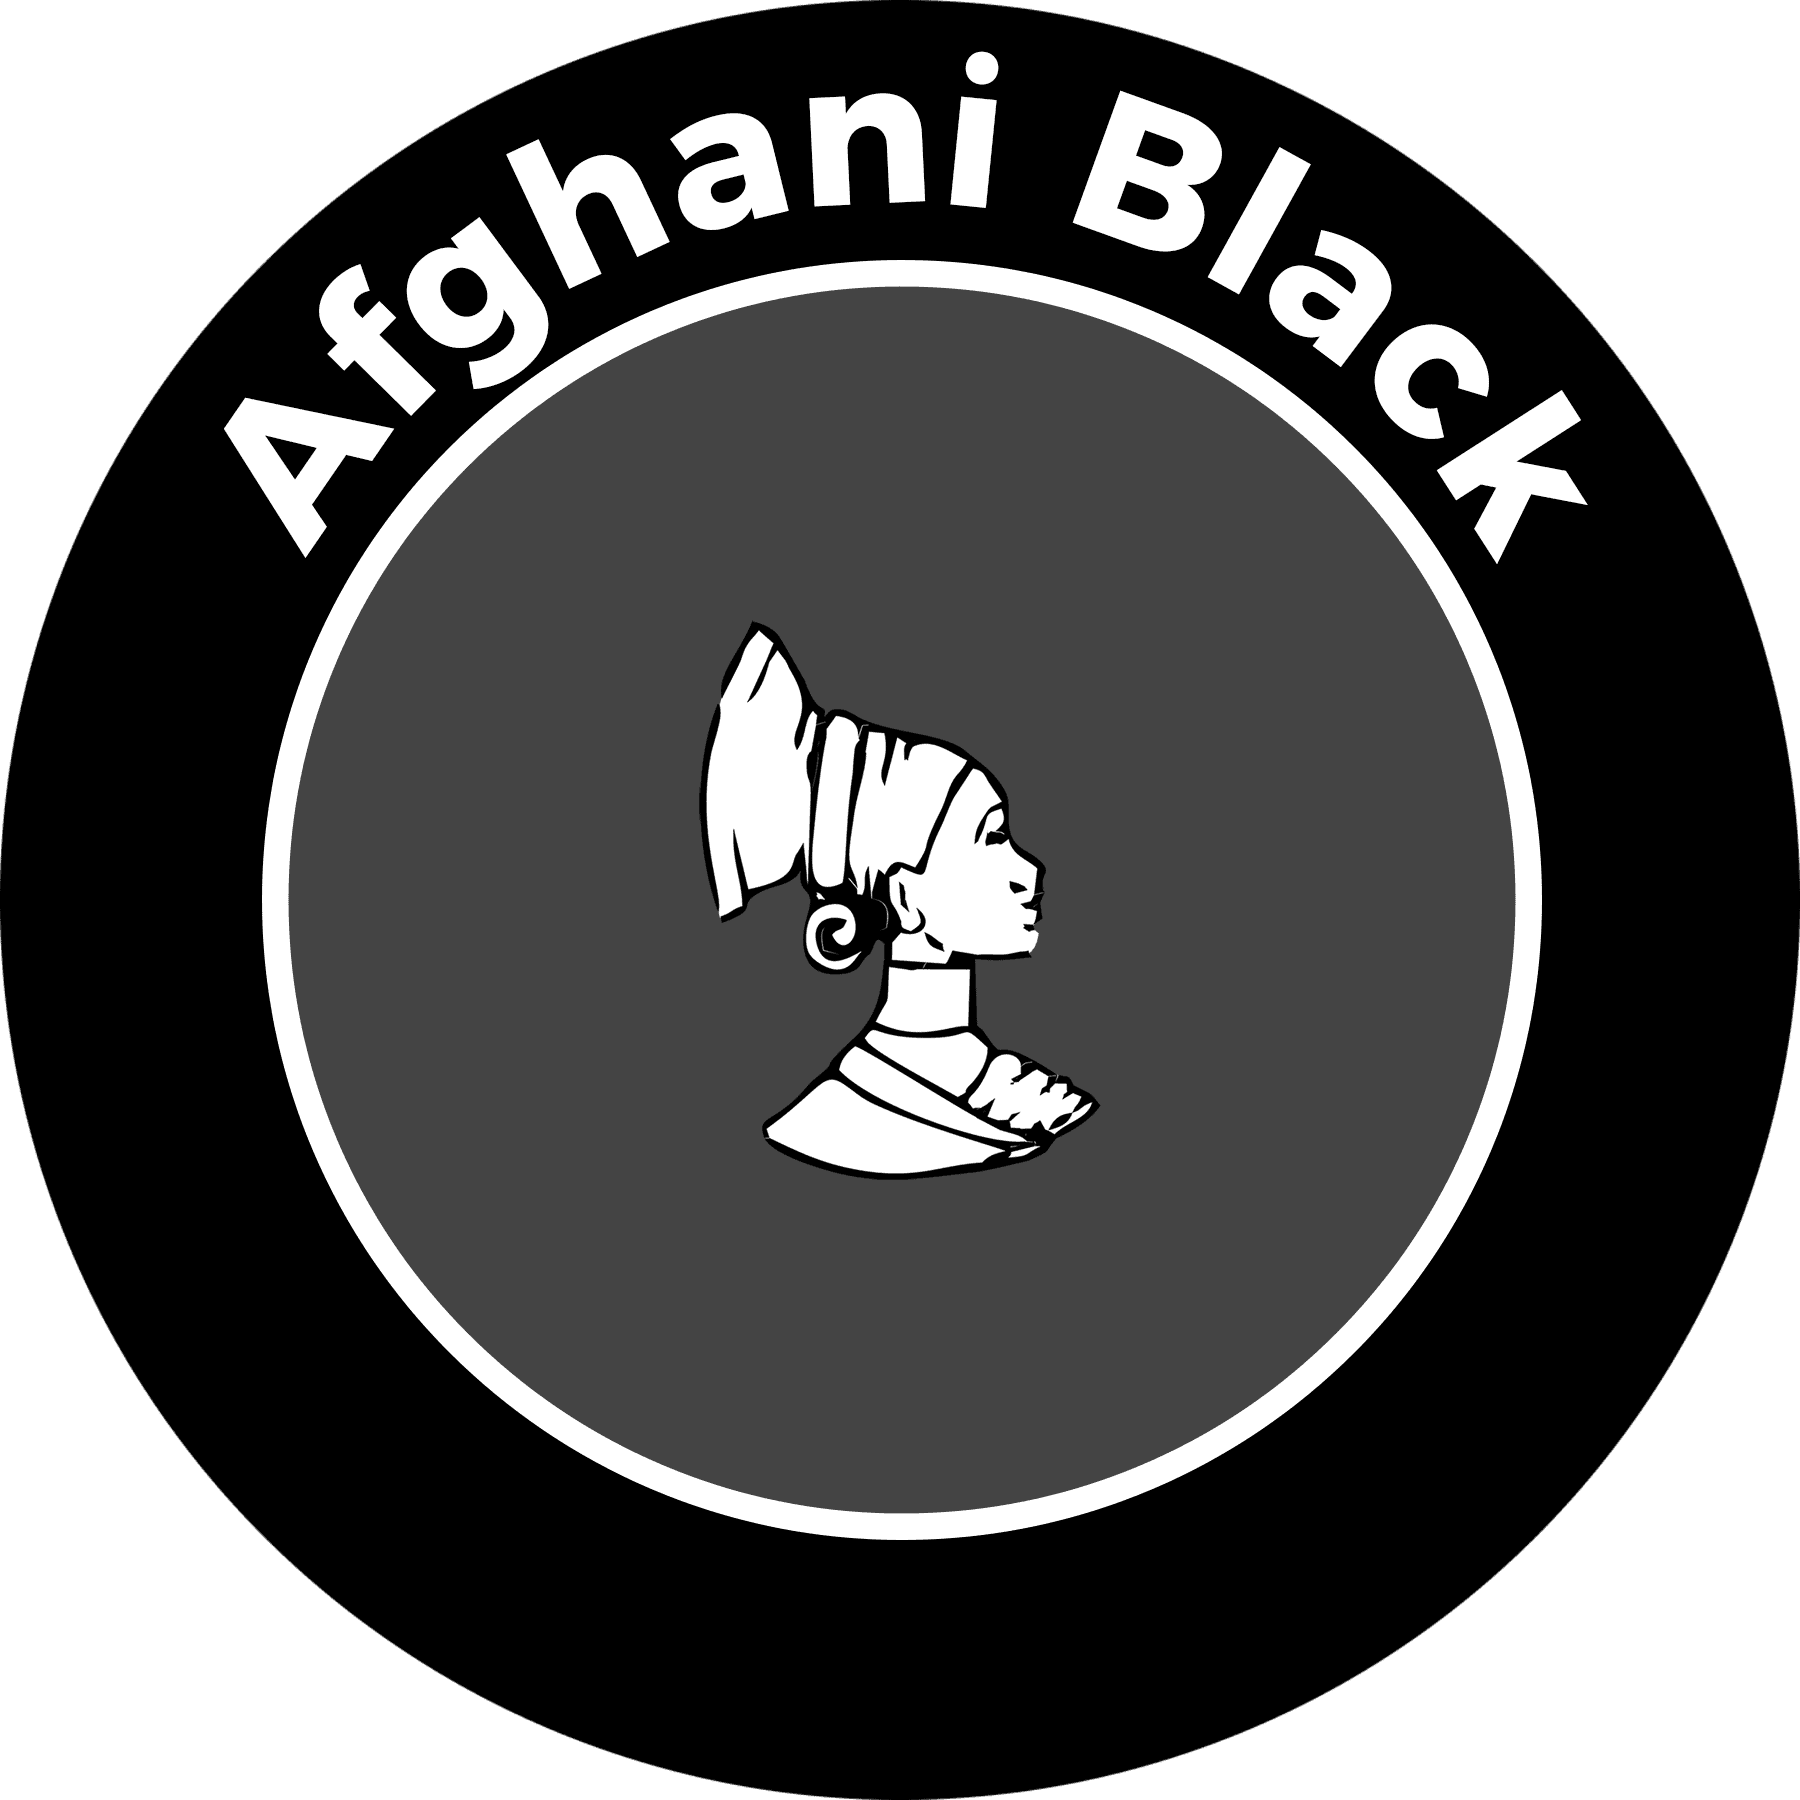 Afghani Black coffee logo